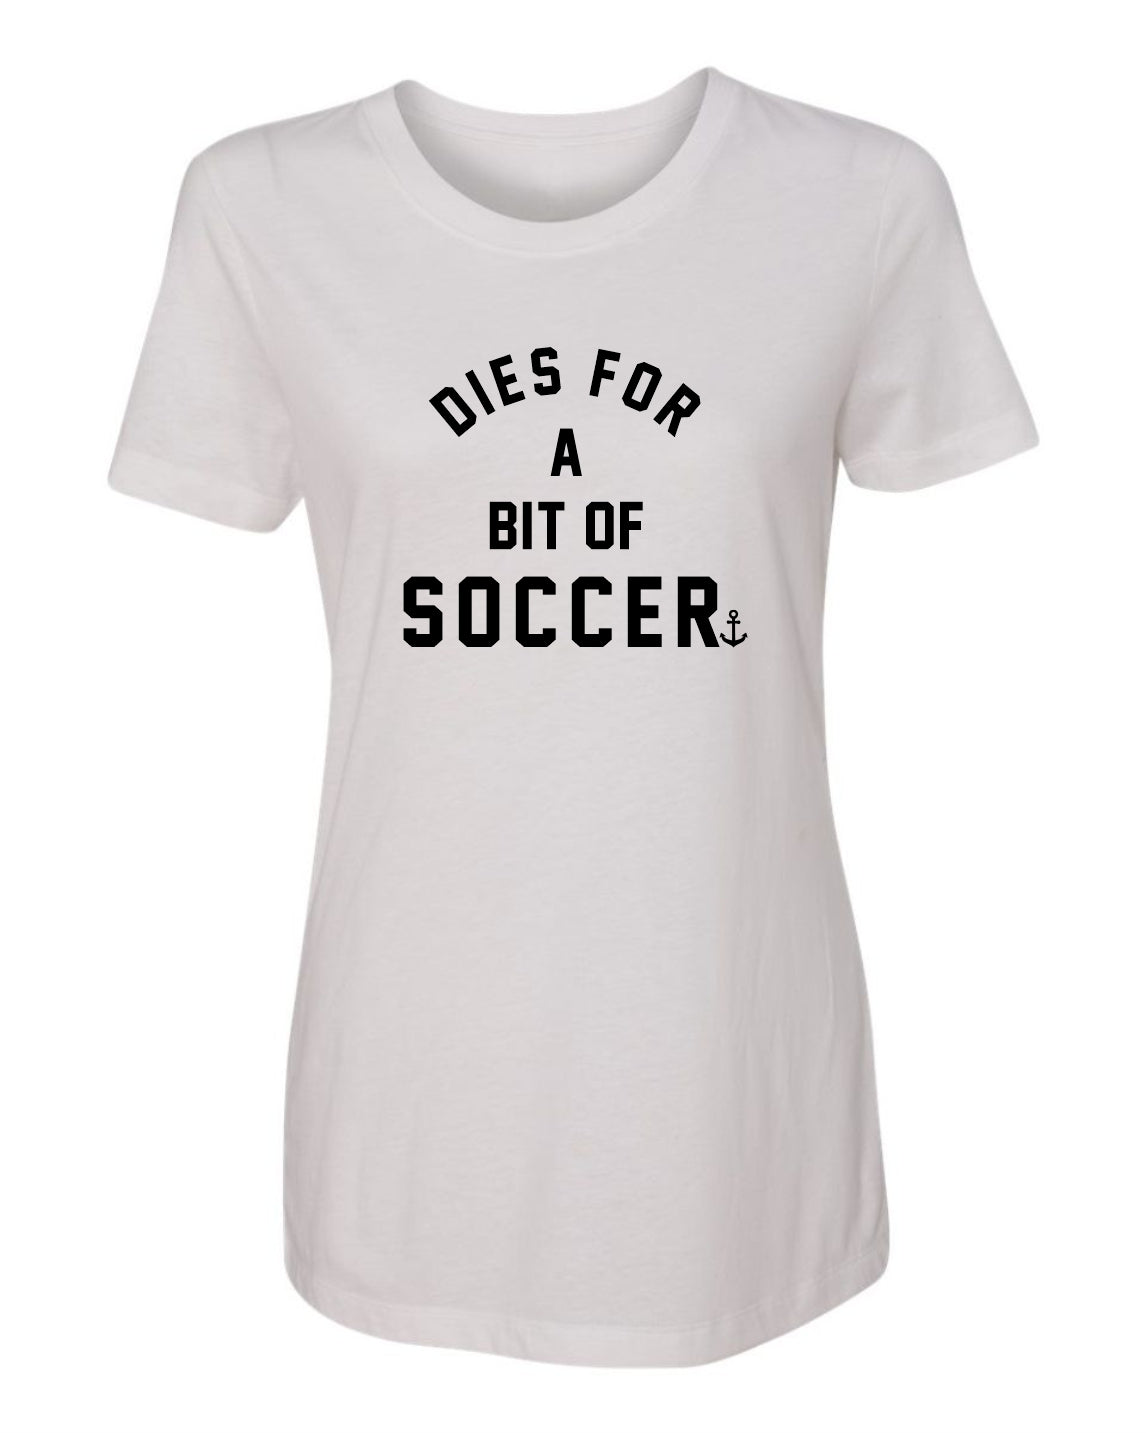 "Dies For A Bit Of Soccer" T-Shirt